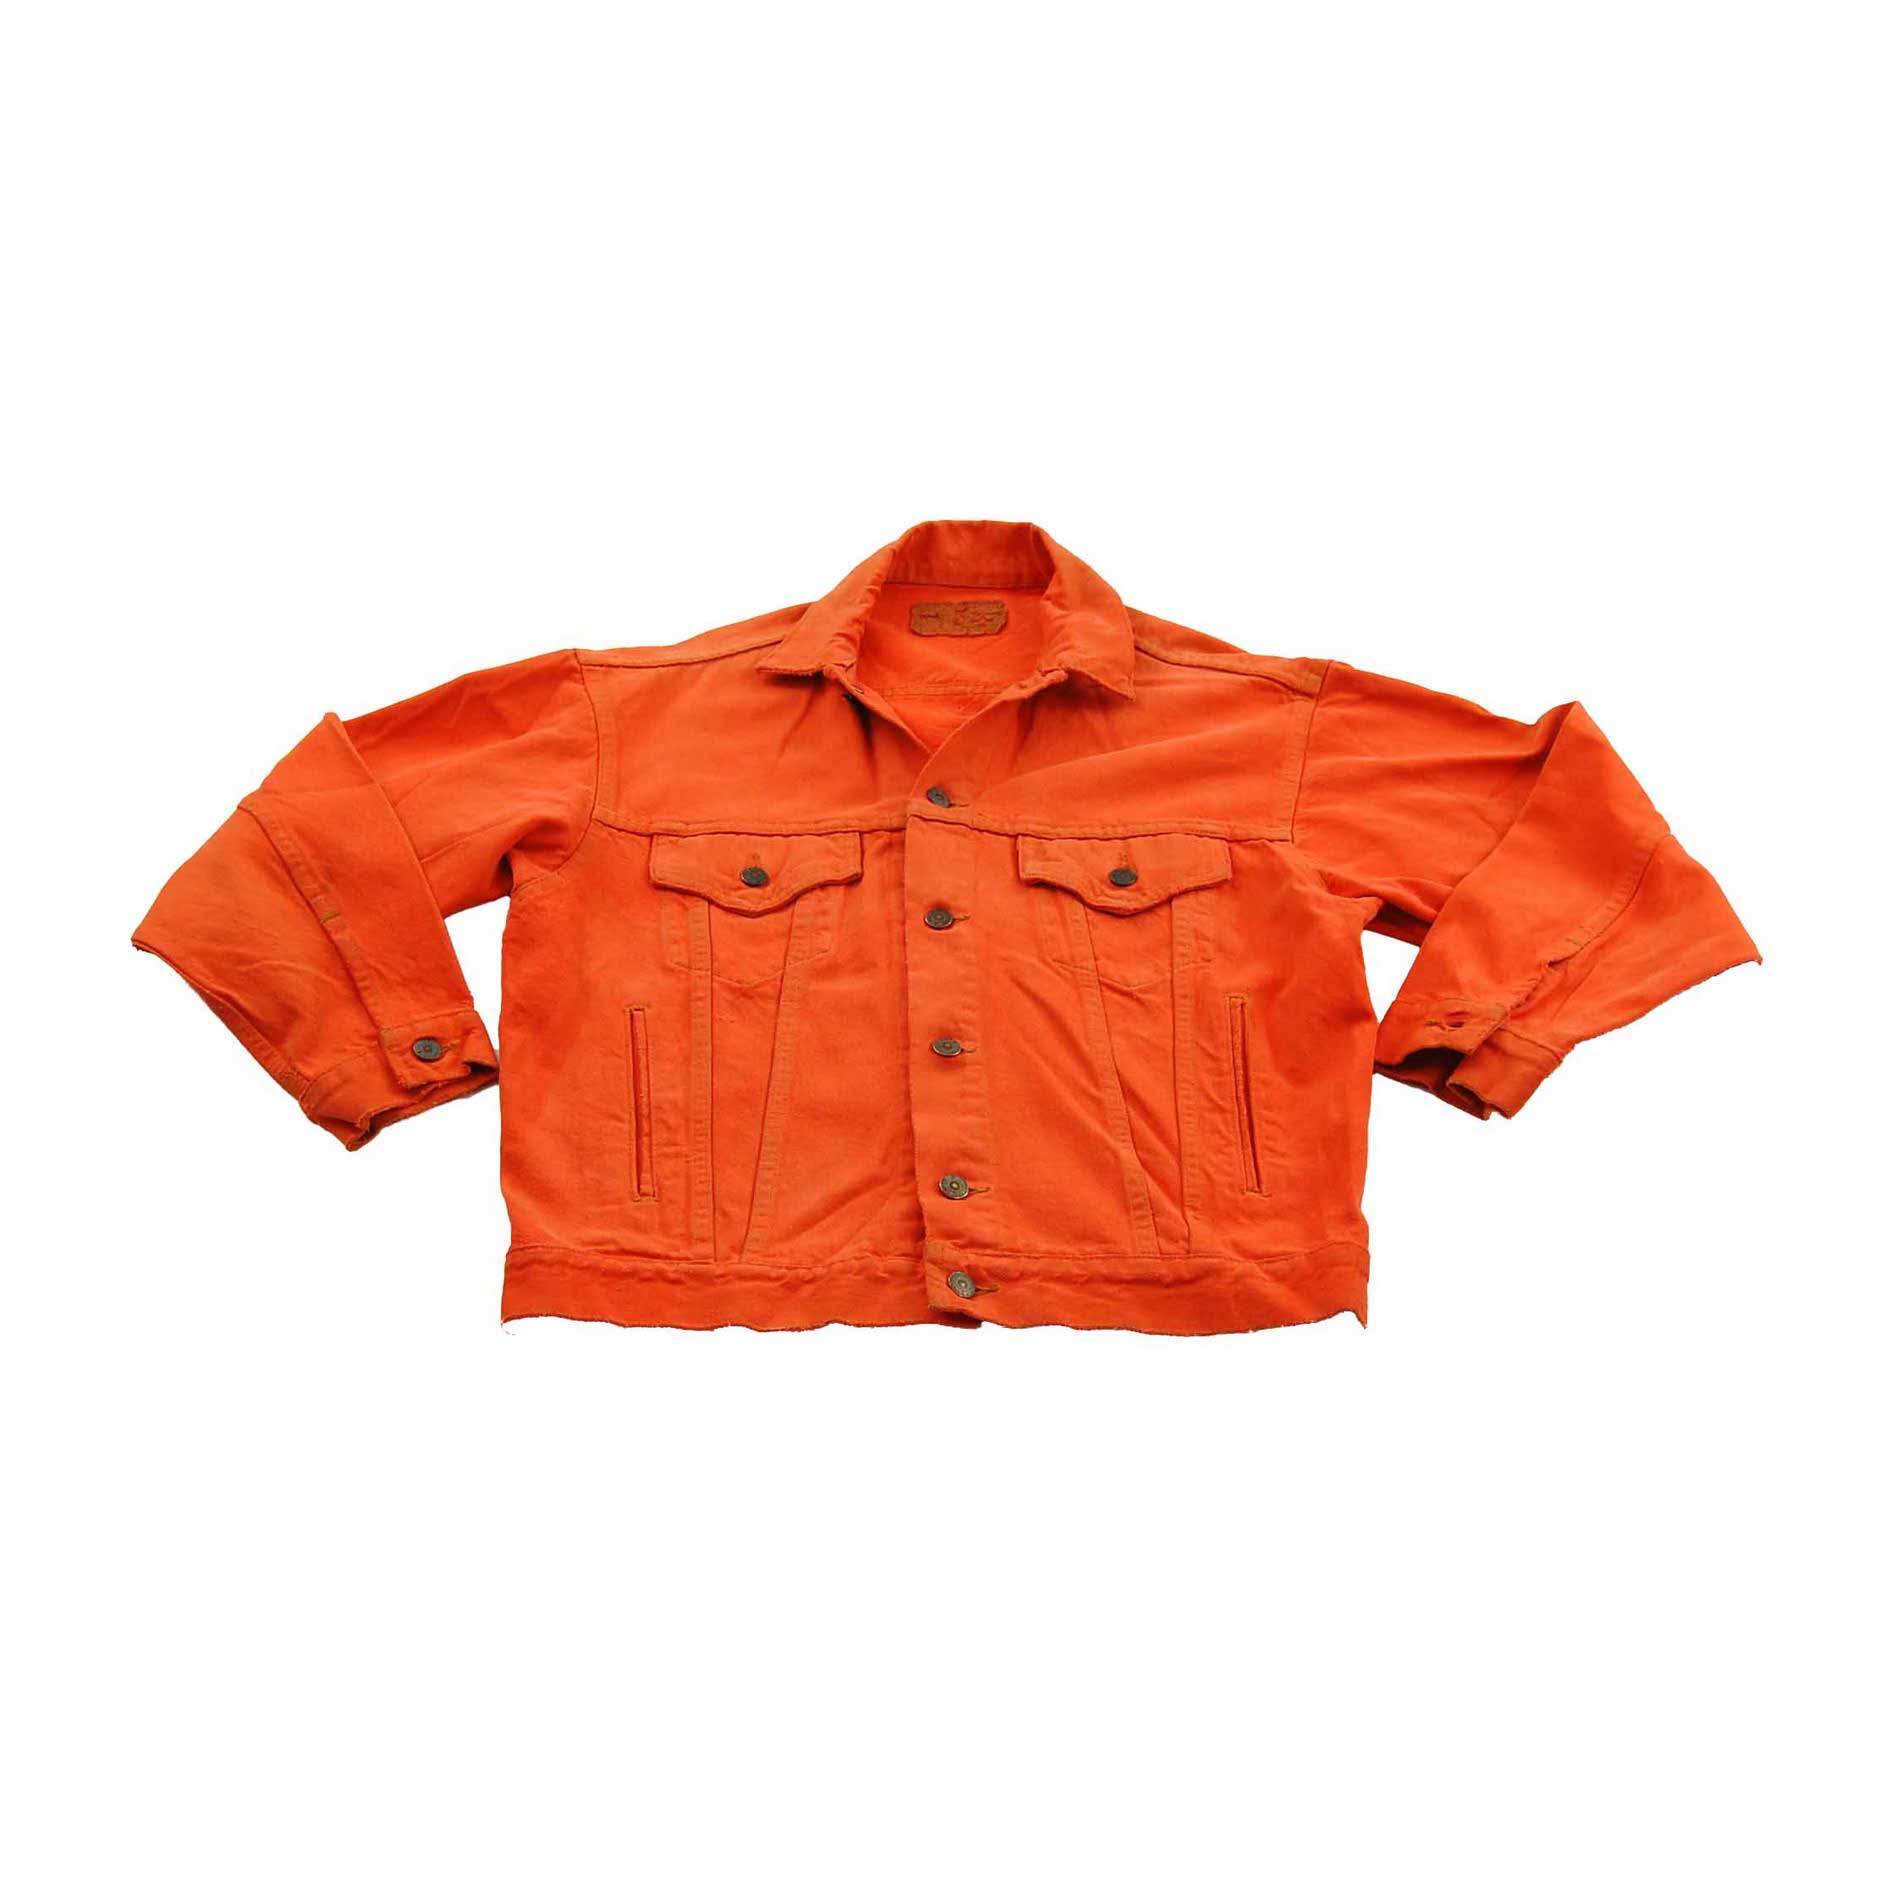 Descubrir 83+ imagen levi’s orange jacket